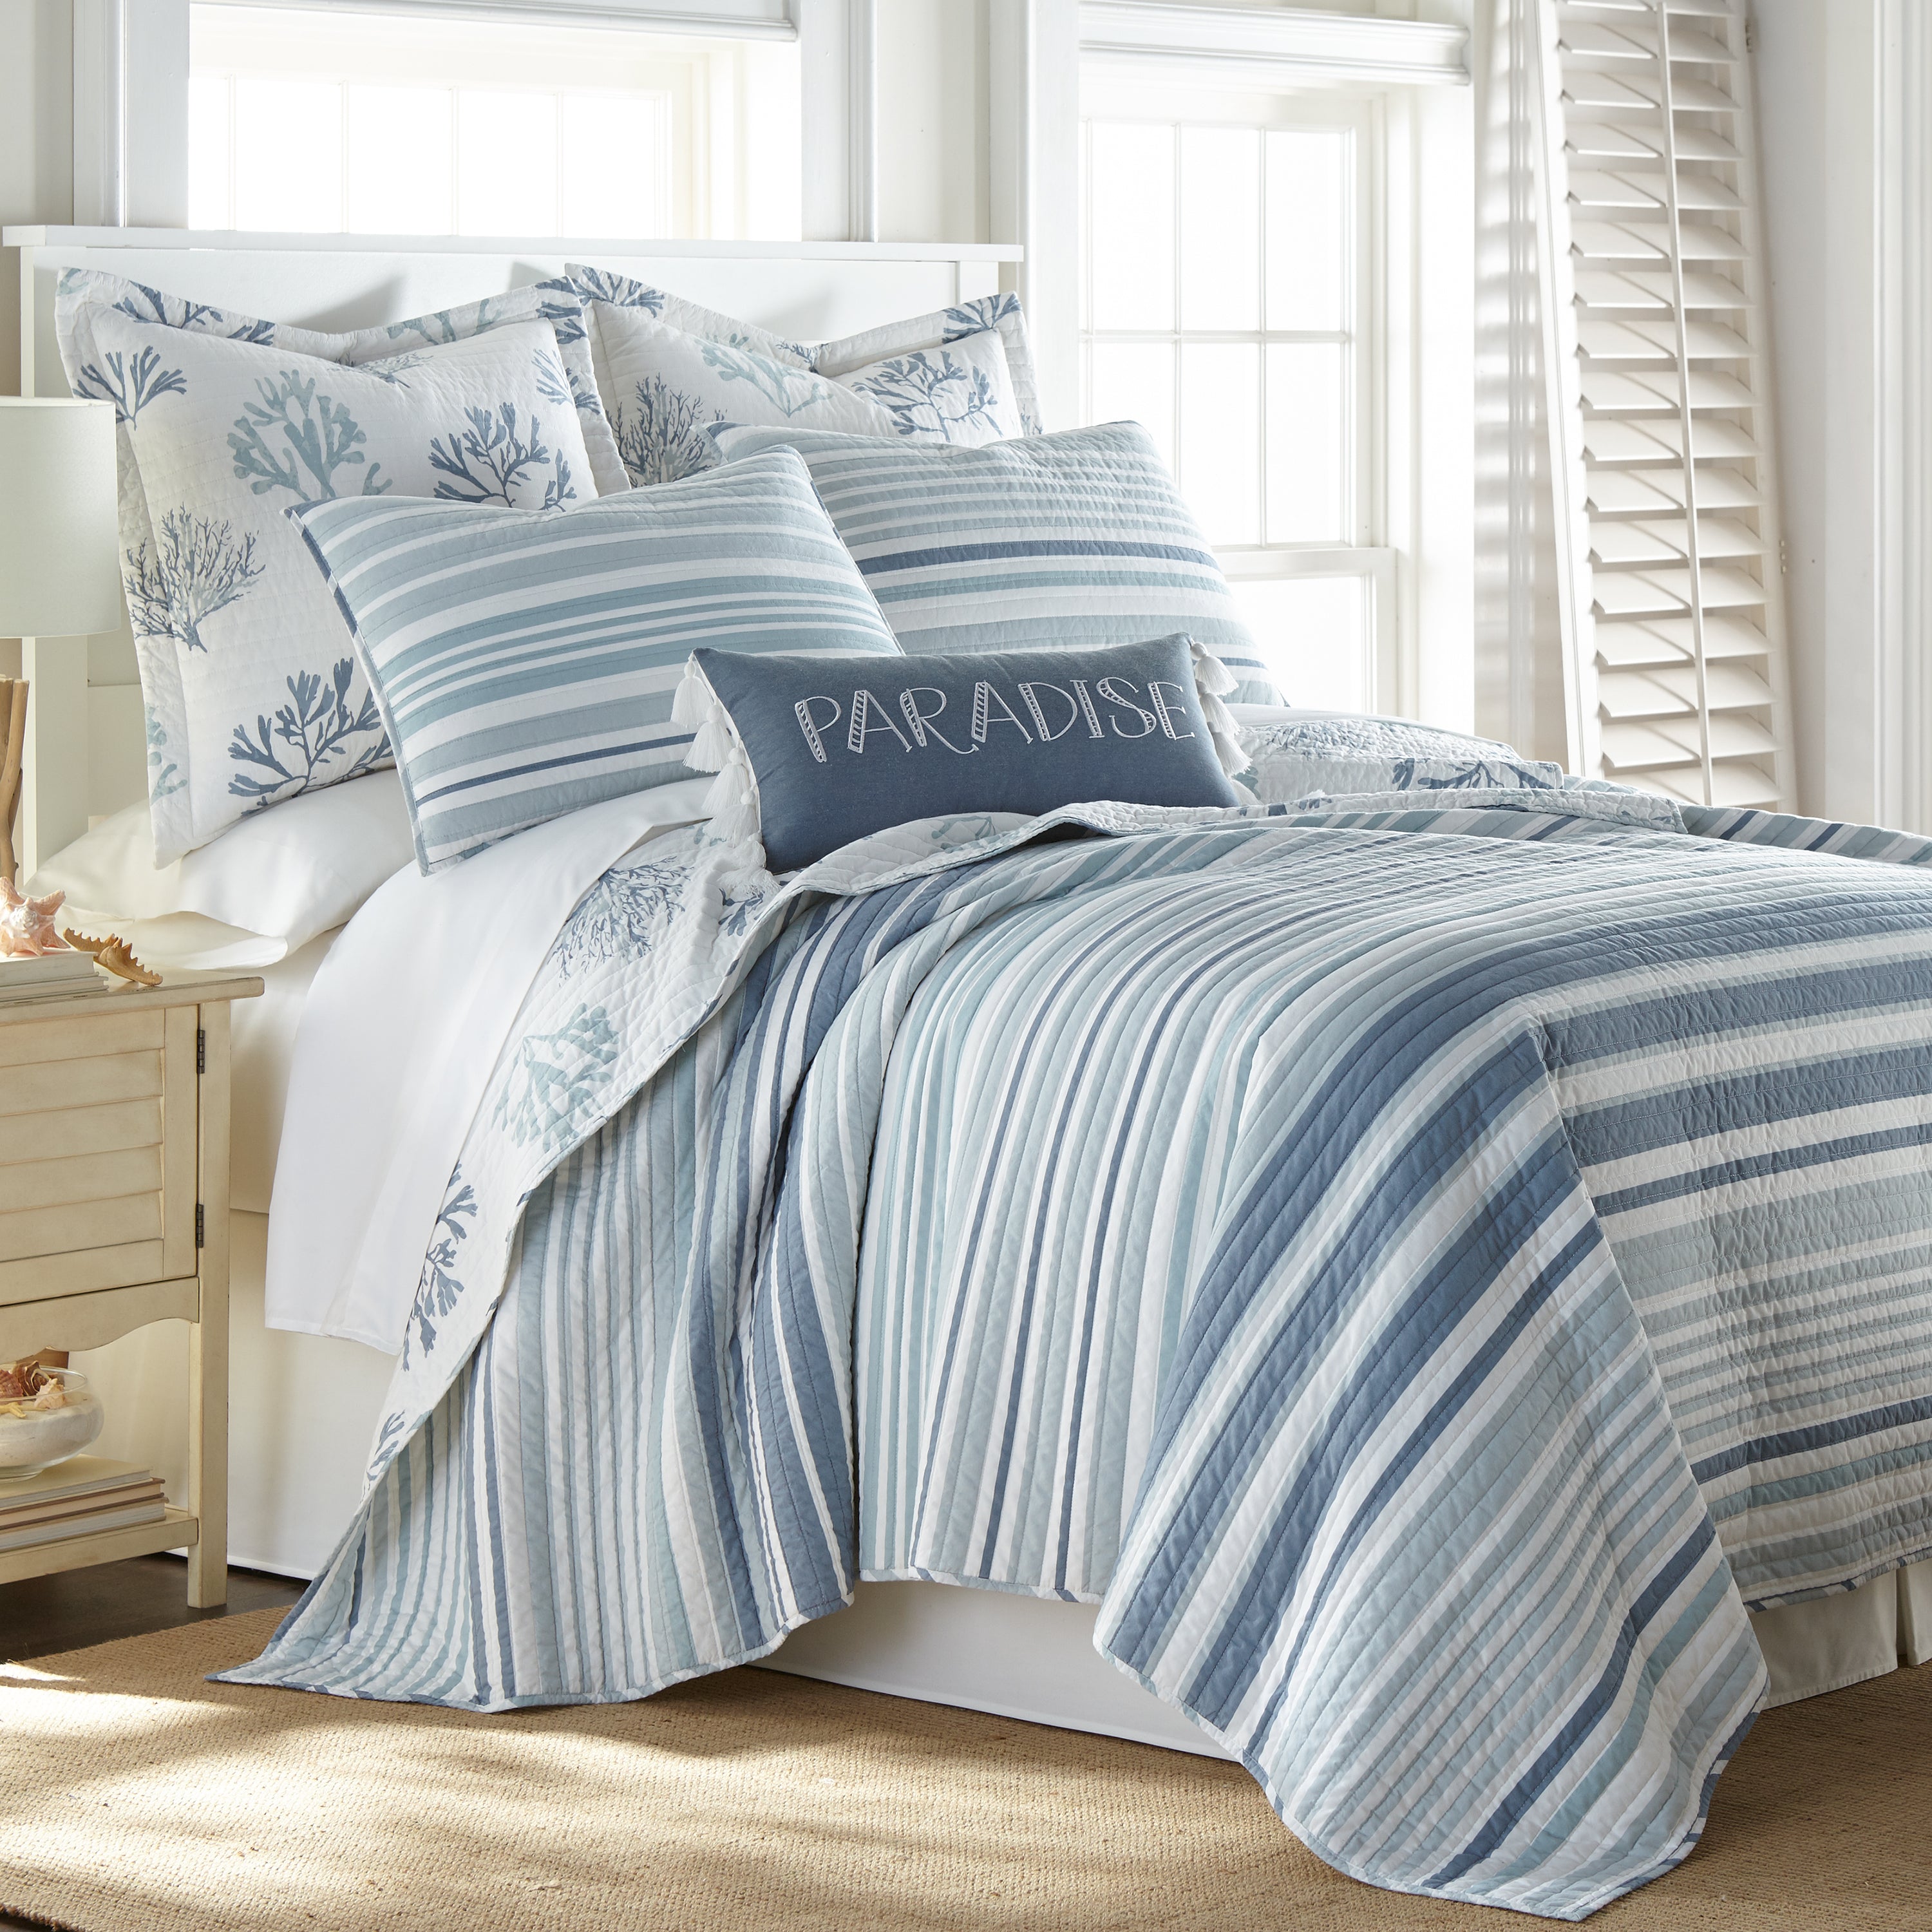 Louis vuitton hot logo brand bedding sets bedspread duvet cover